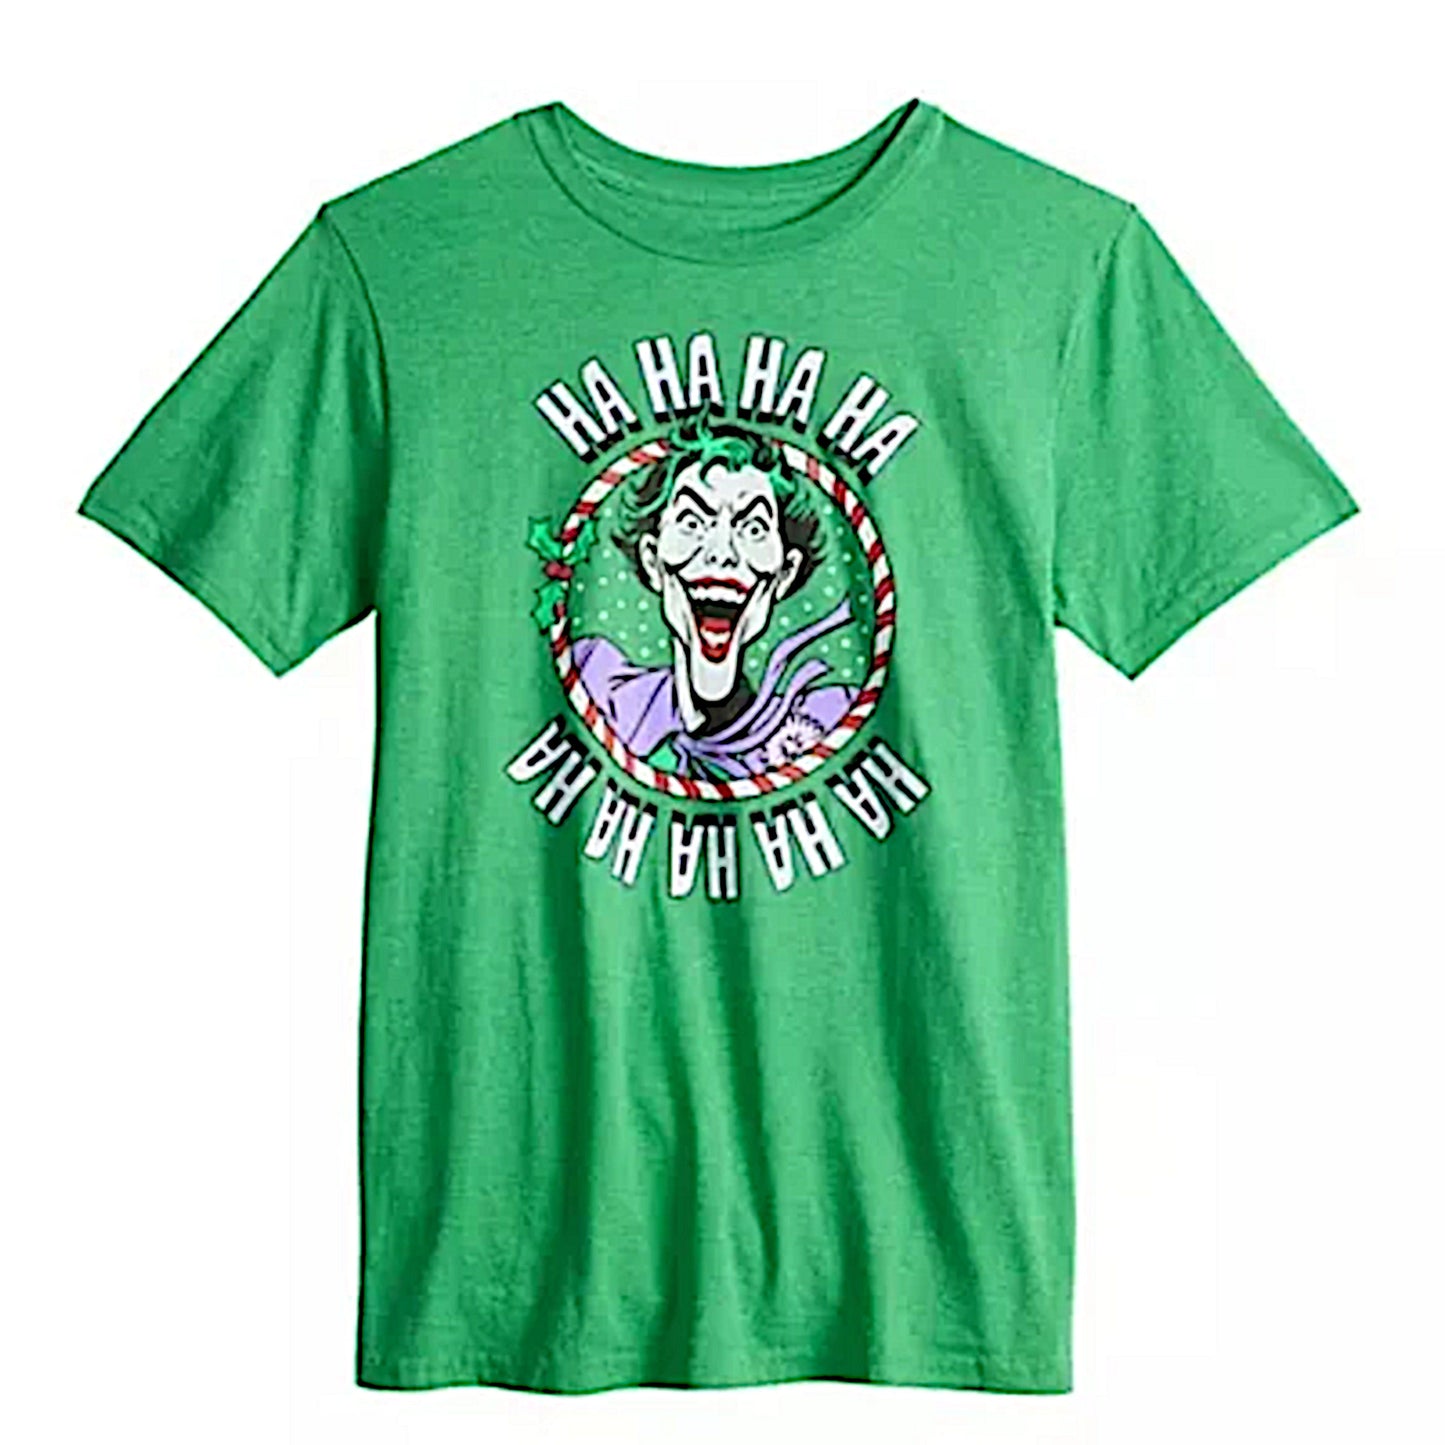 The Joker Men's T-Shirt | Crew Neck Cotton Holiday Graphic Tee - DC Comics - Shirts